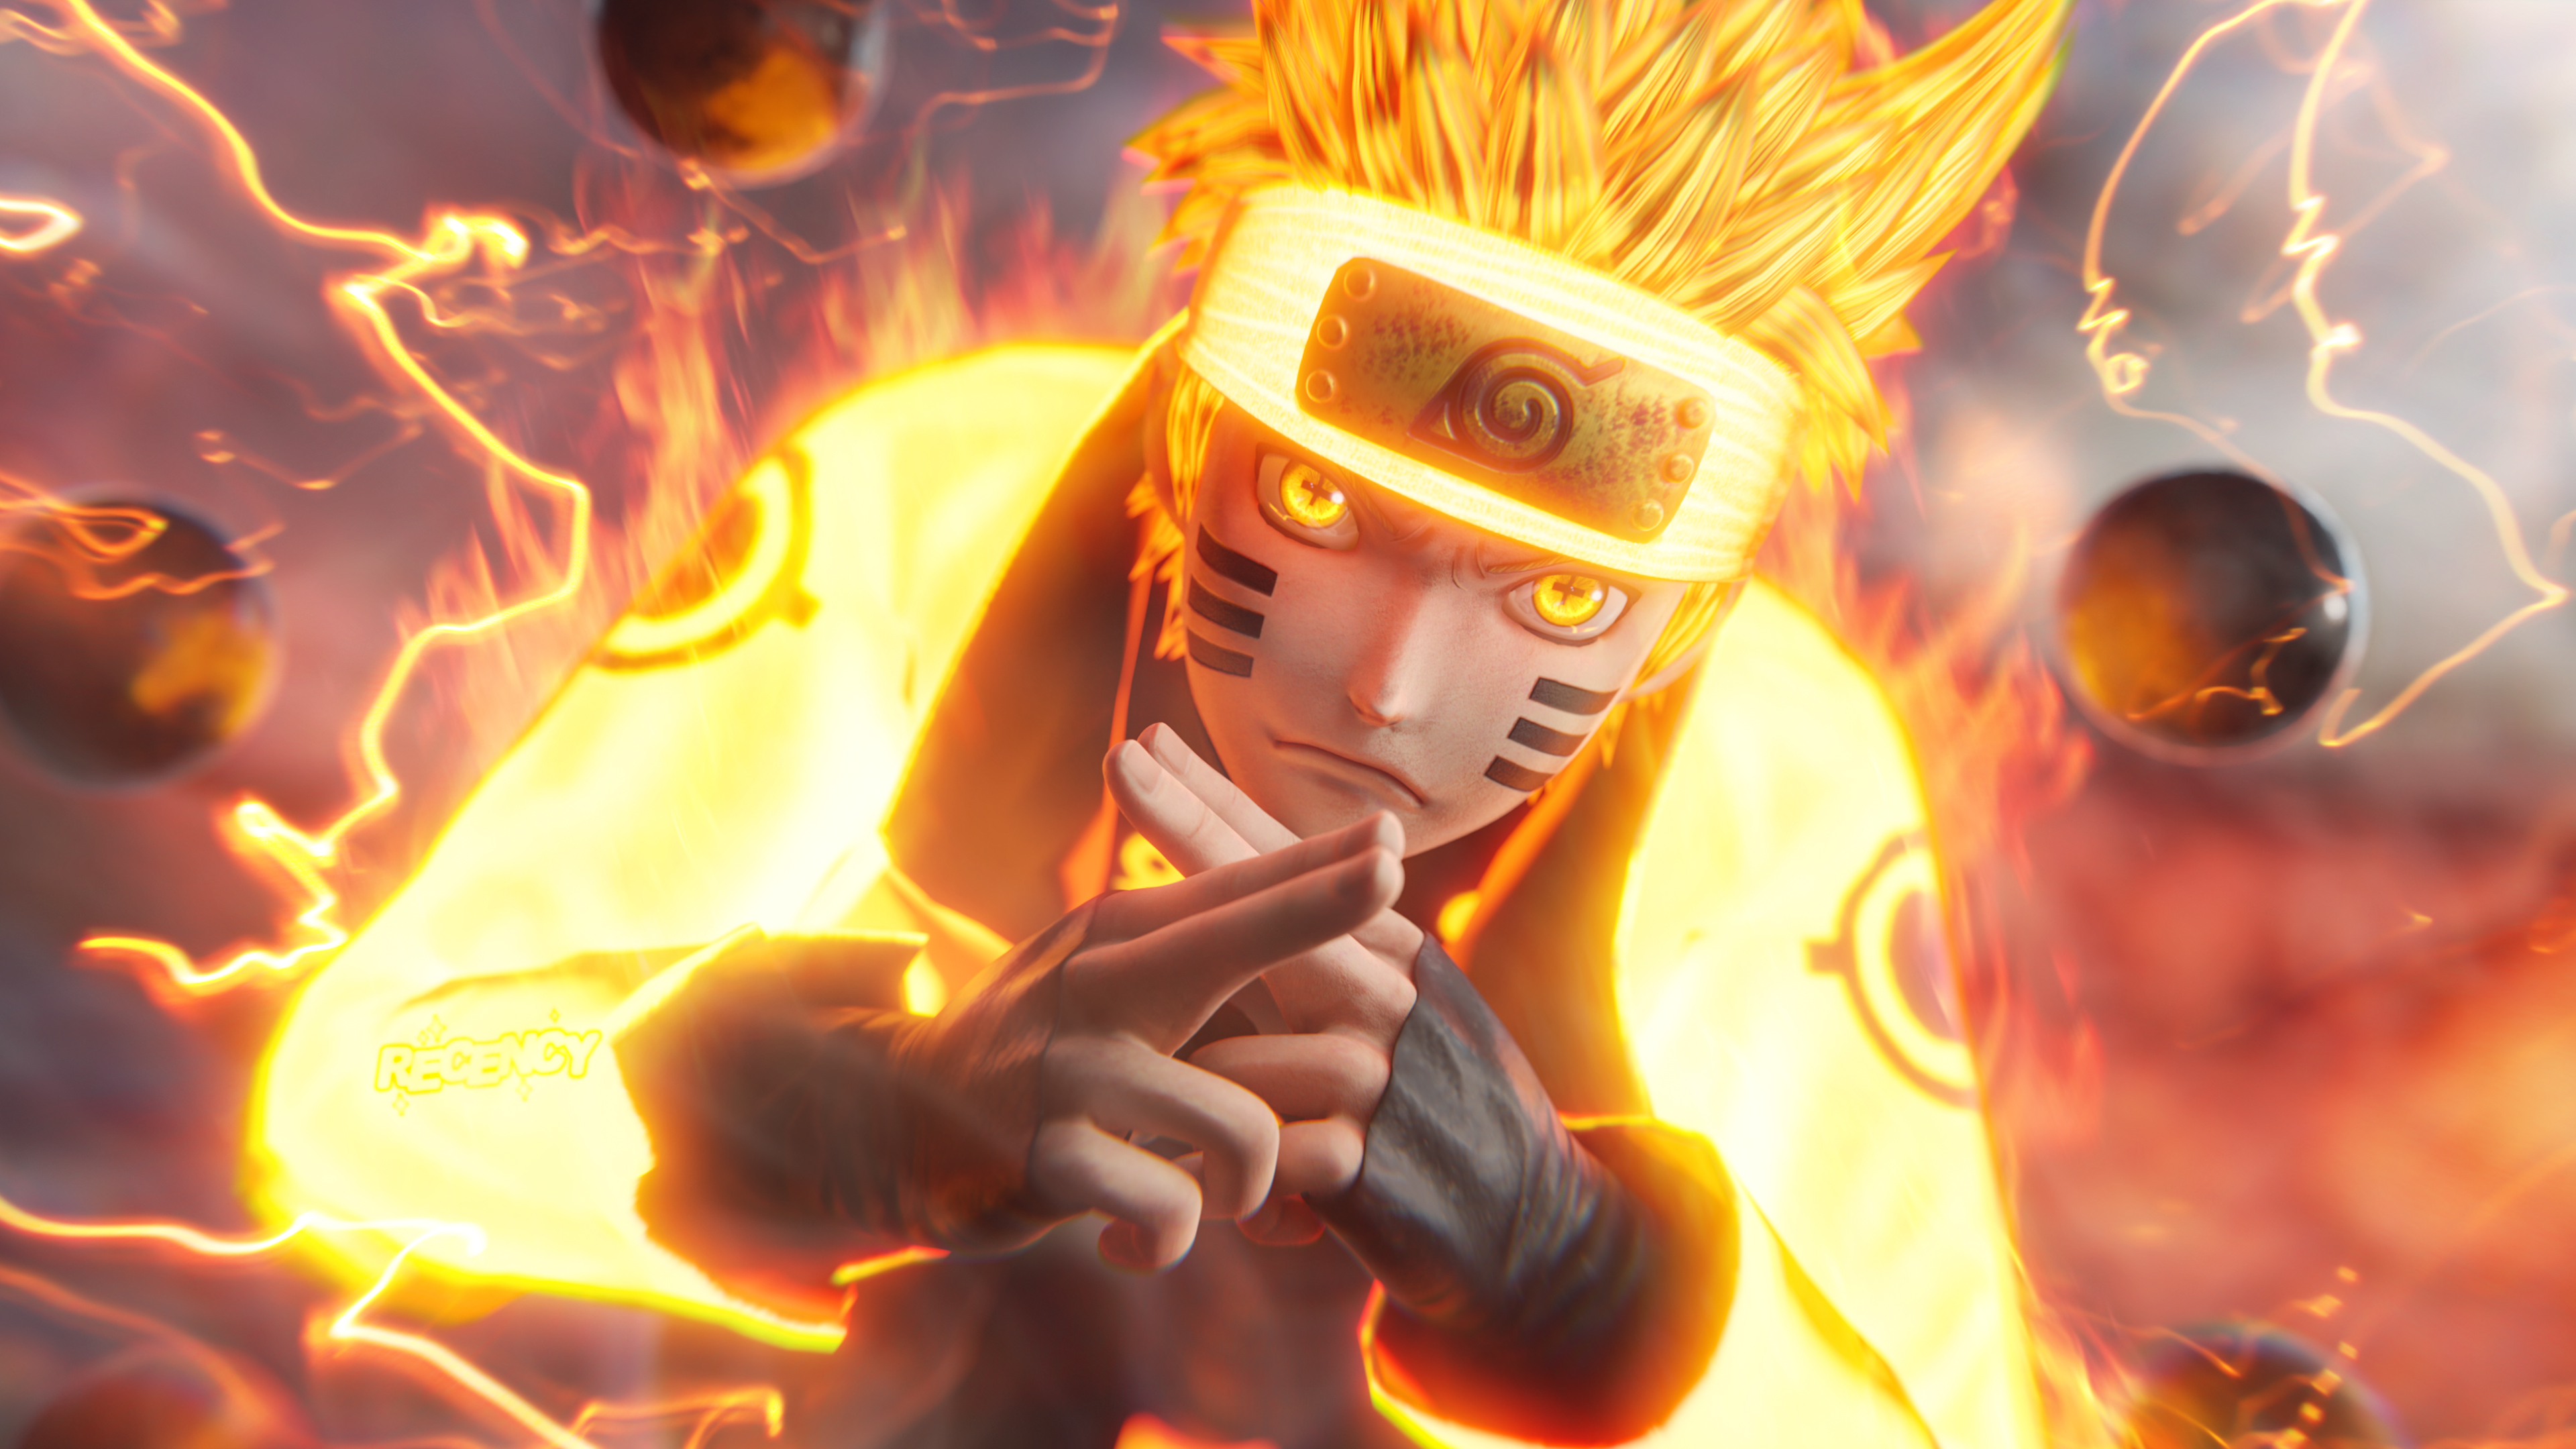 Image: The Wallpaper Of Anime - Naruto Uzumaki in 2020